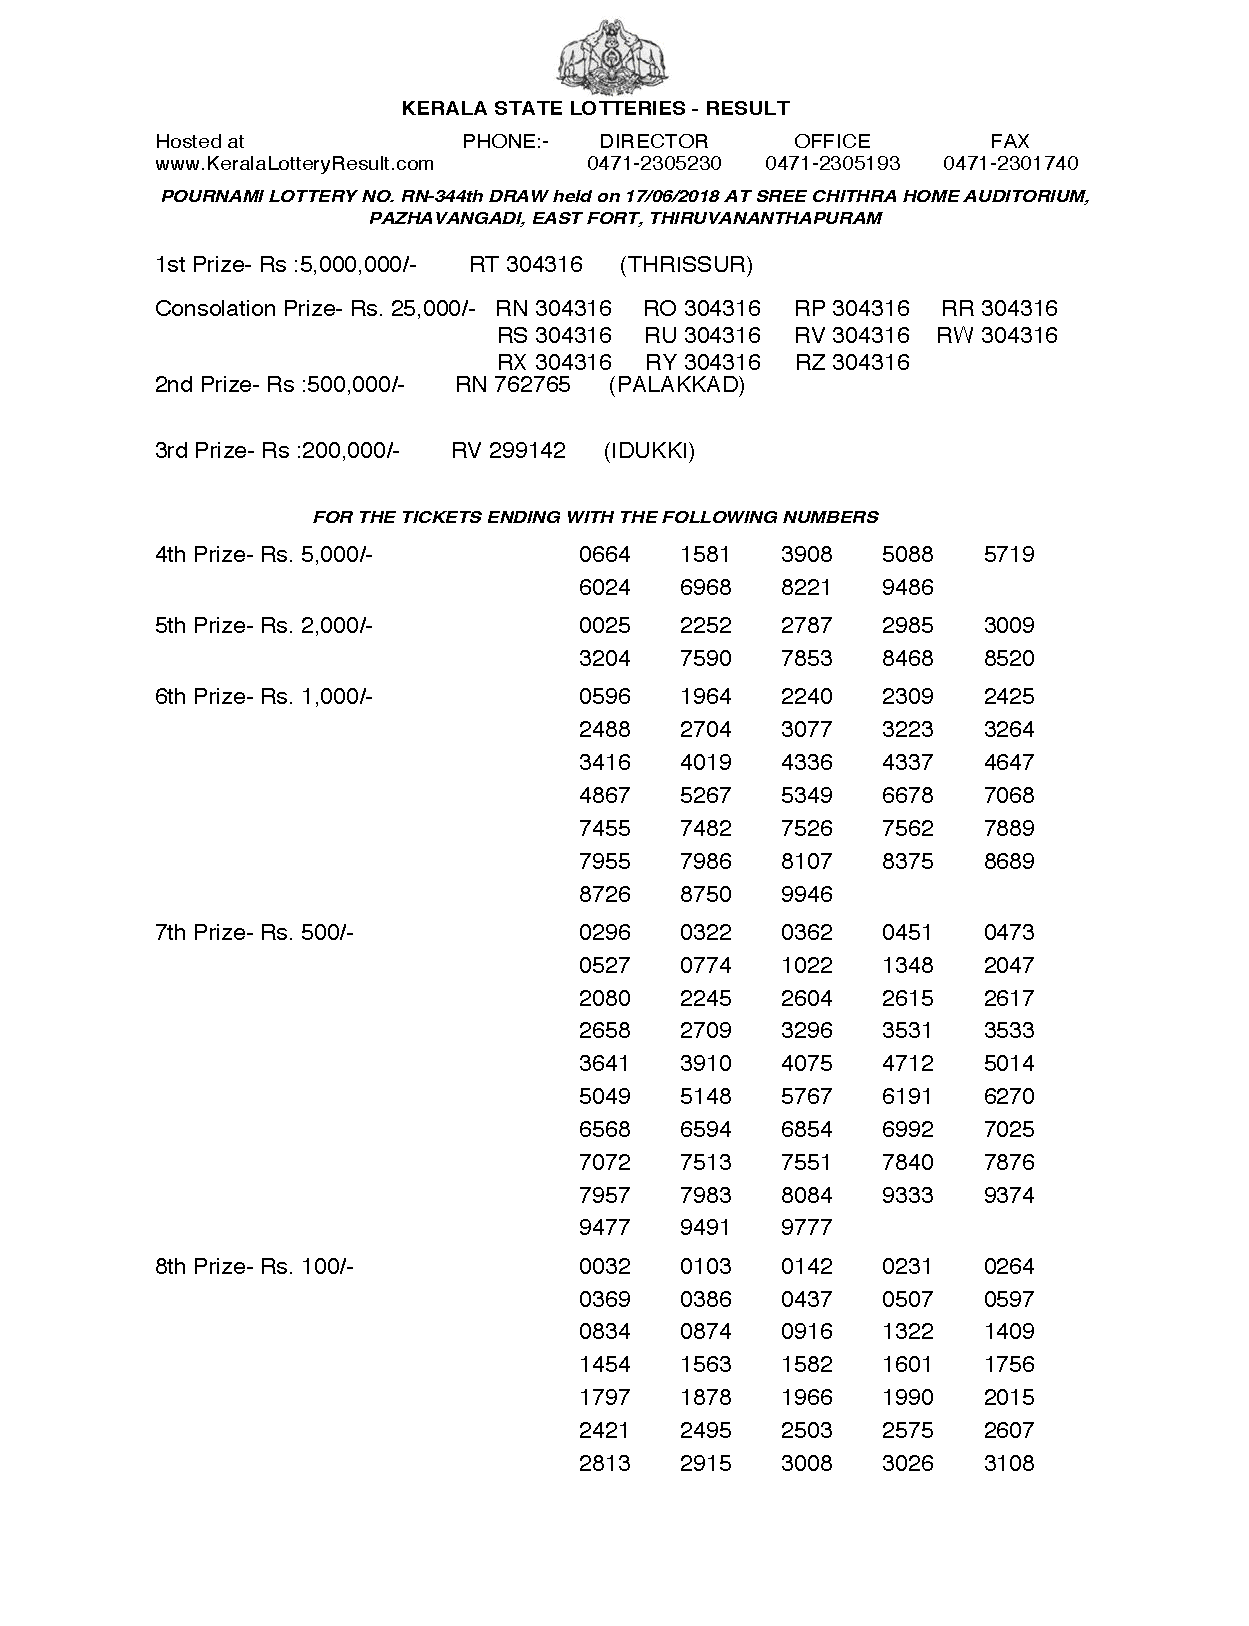 Pournami RN344 Kerala Lottery Results Screenshot: Page 1